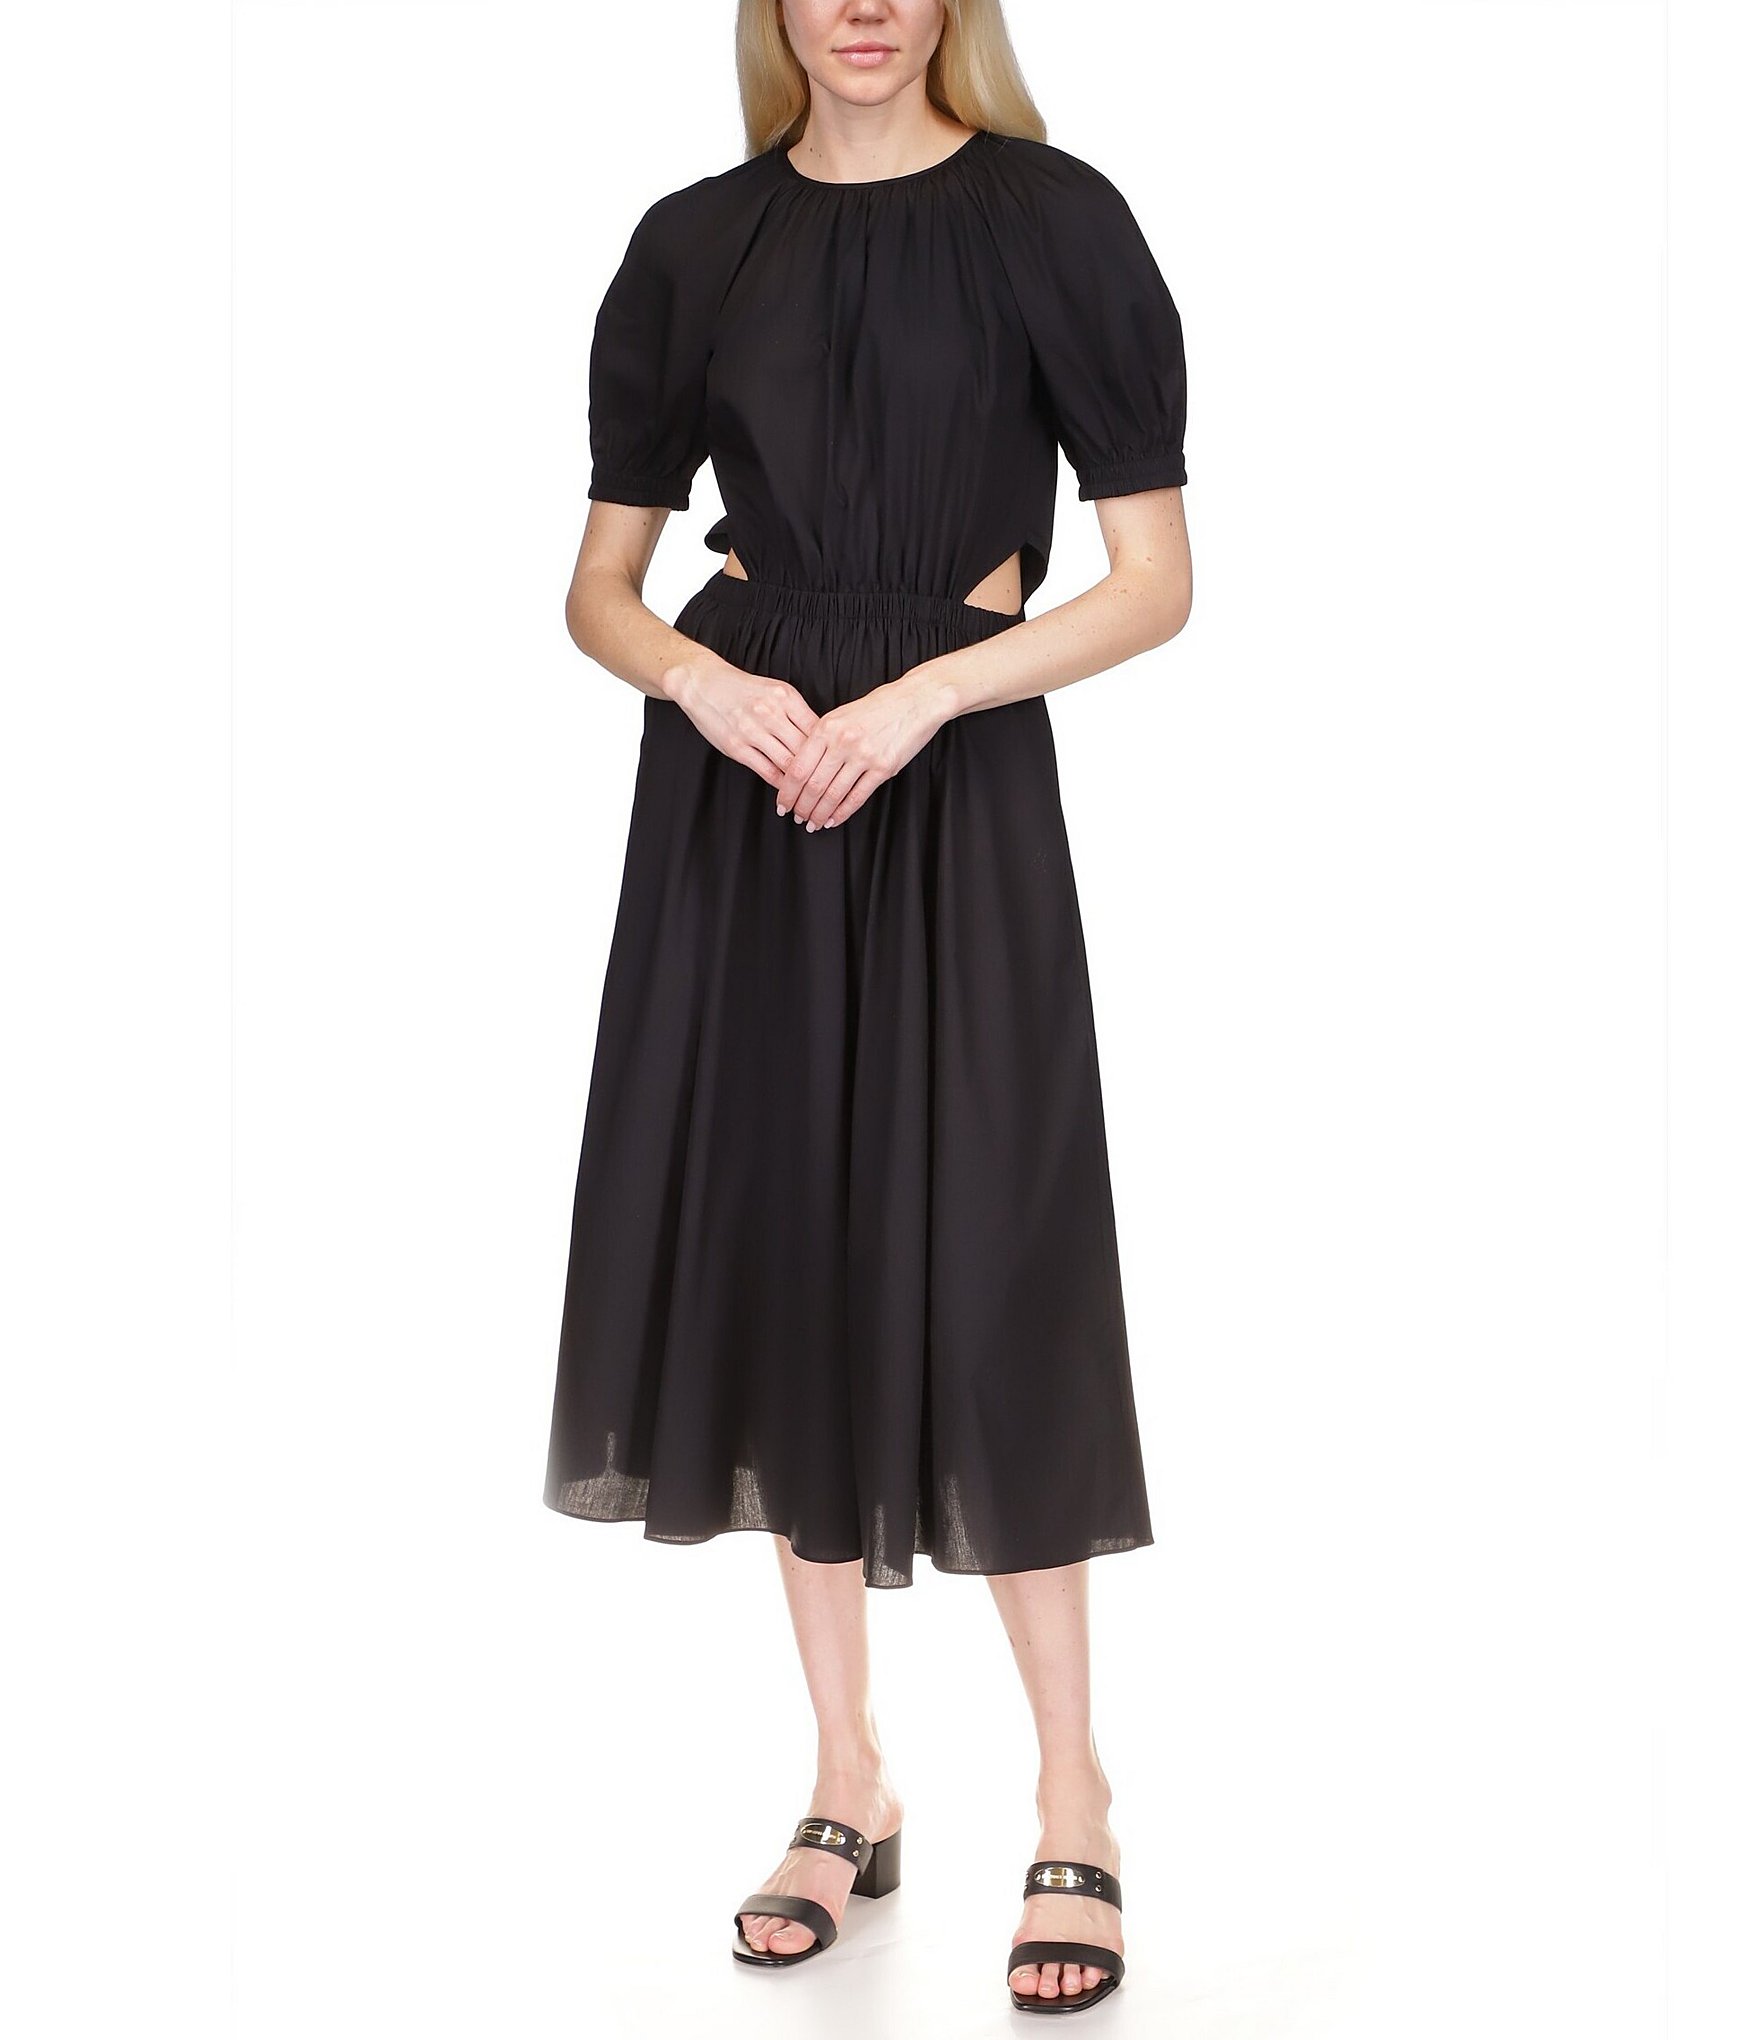 Jersey stretch cutout midi dress - Michael Kors Collection - Women